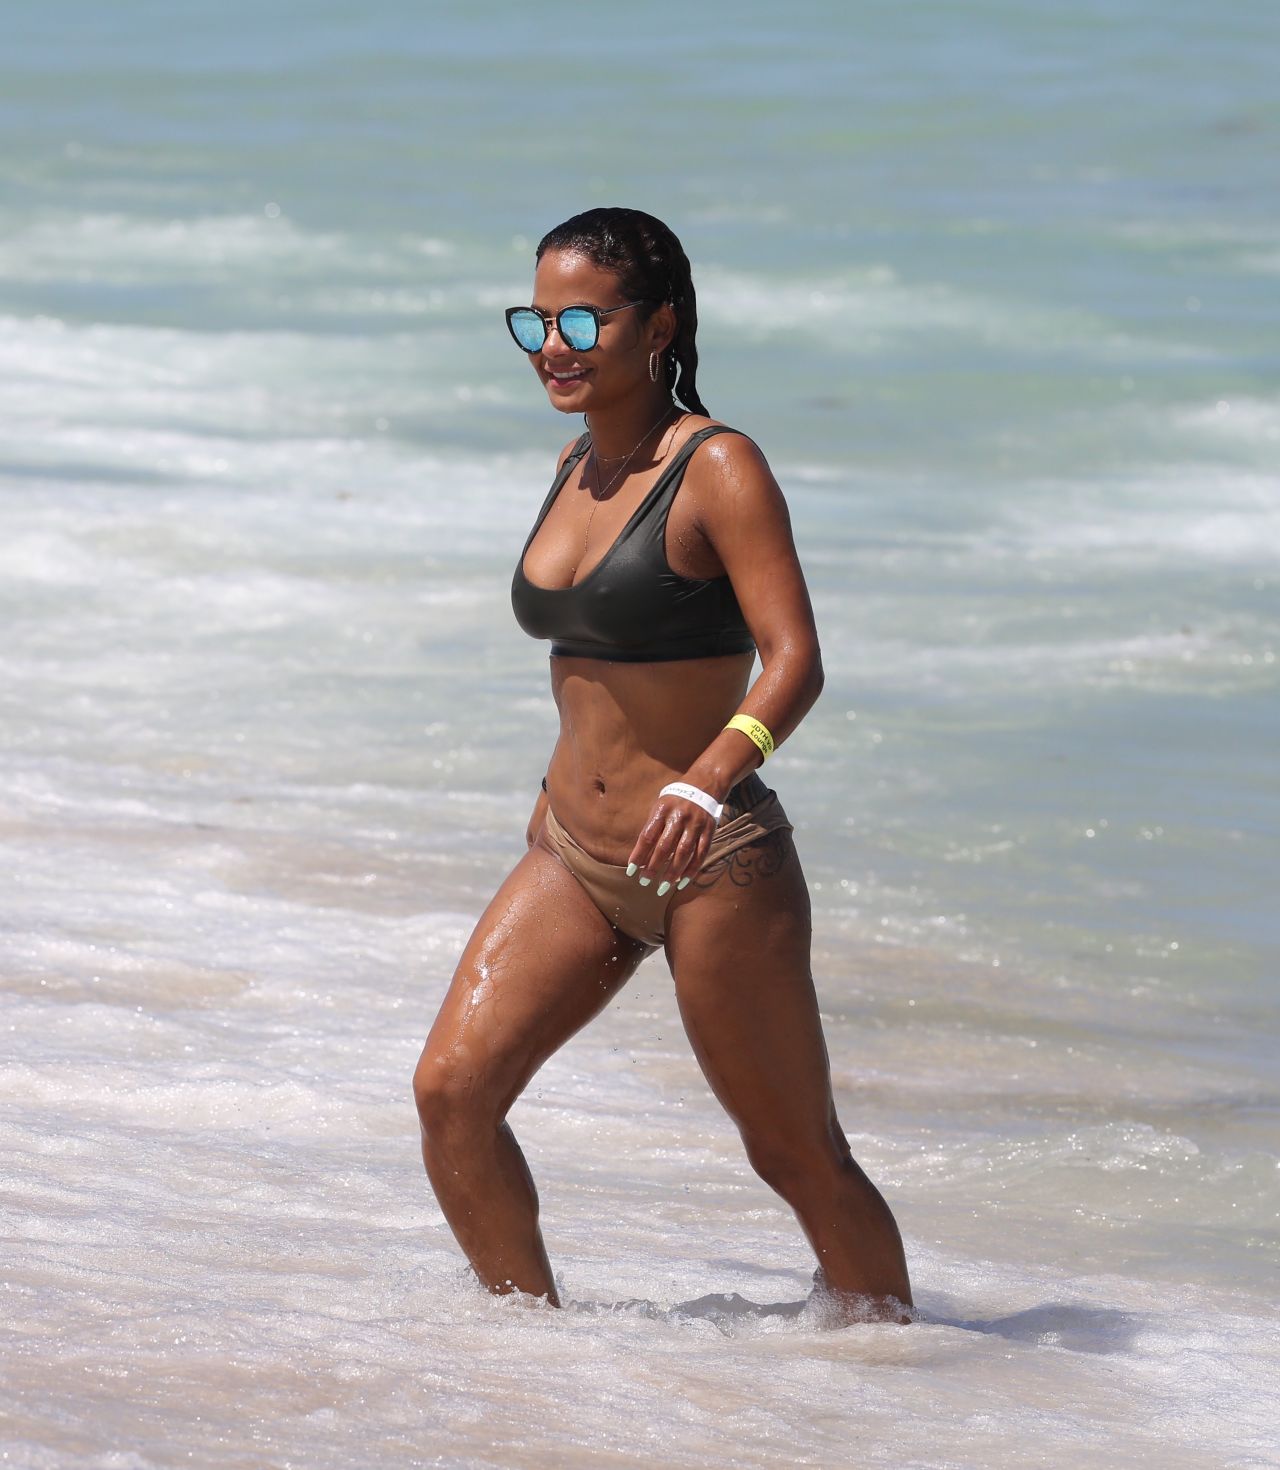 christina-milian-in-a-black-bikini-beach-in-miami-florida-07-01-2017-6.